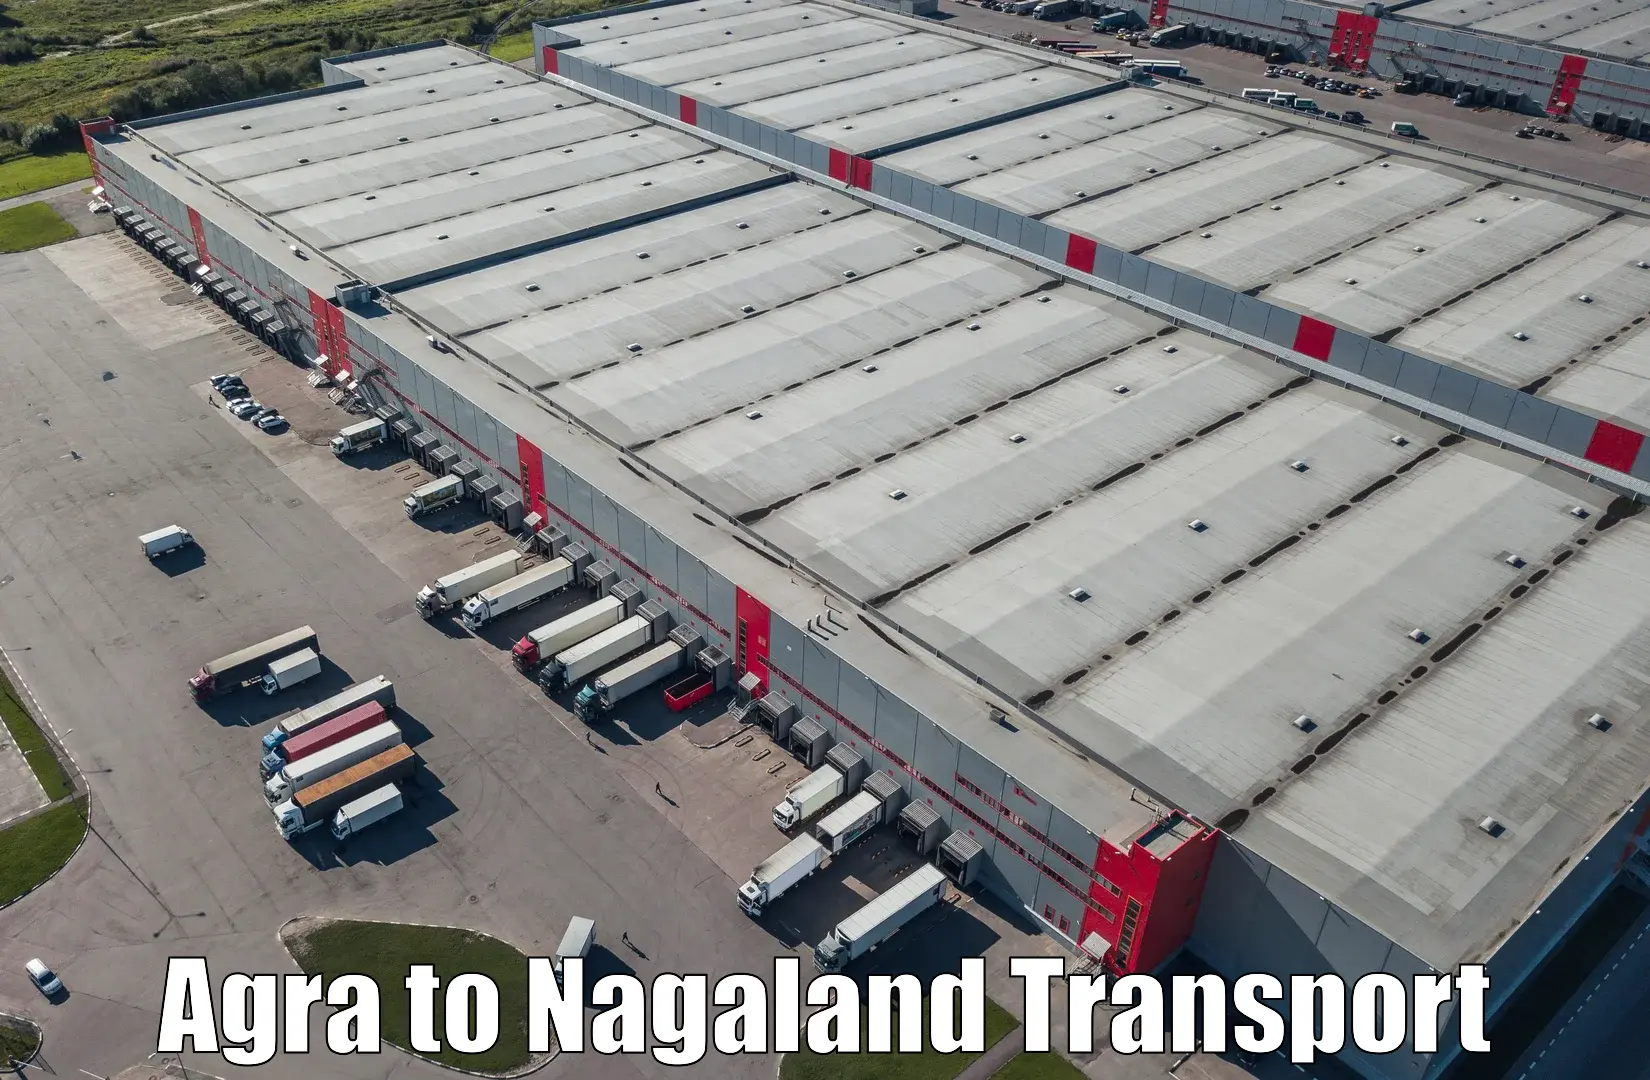 Cycle transportation service Agra to Nagaland